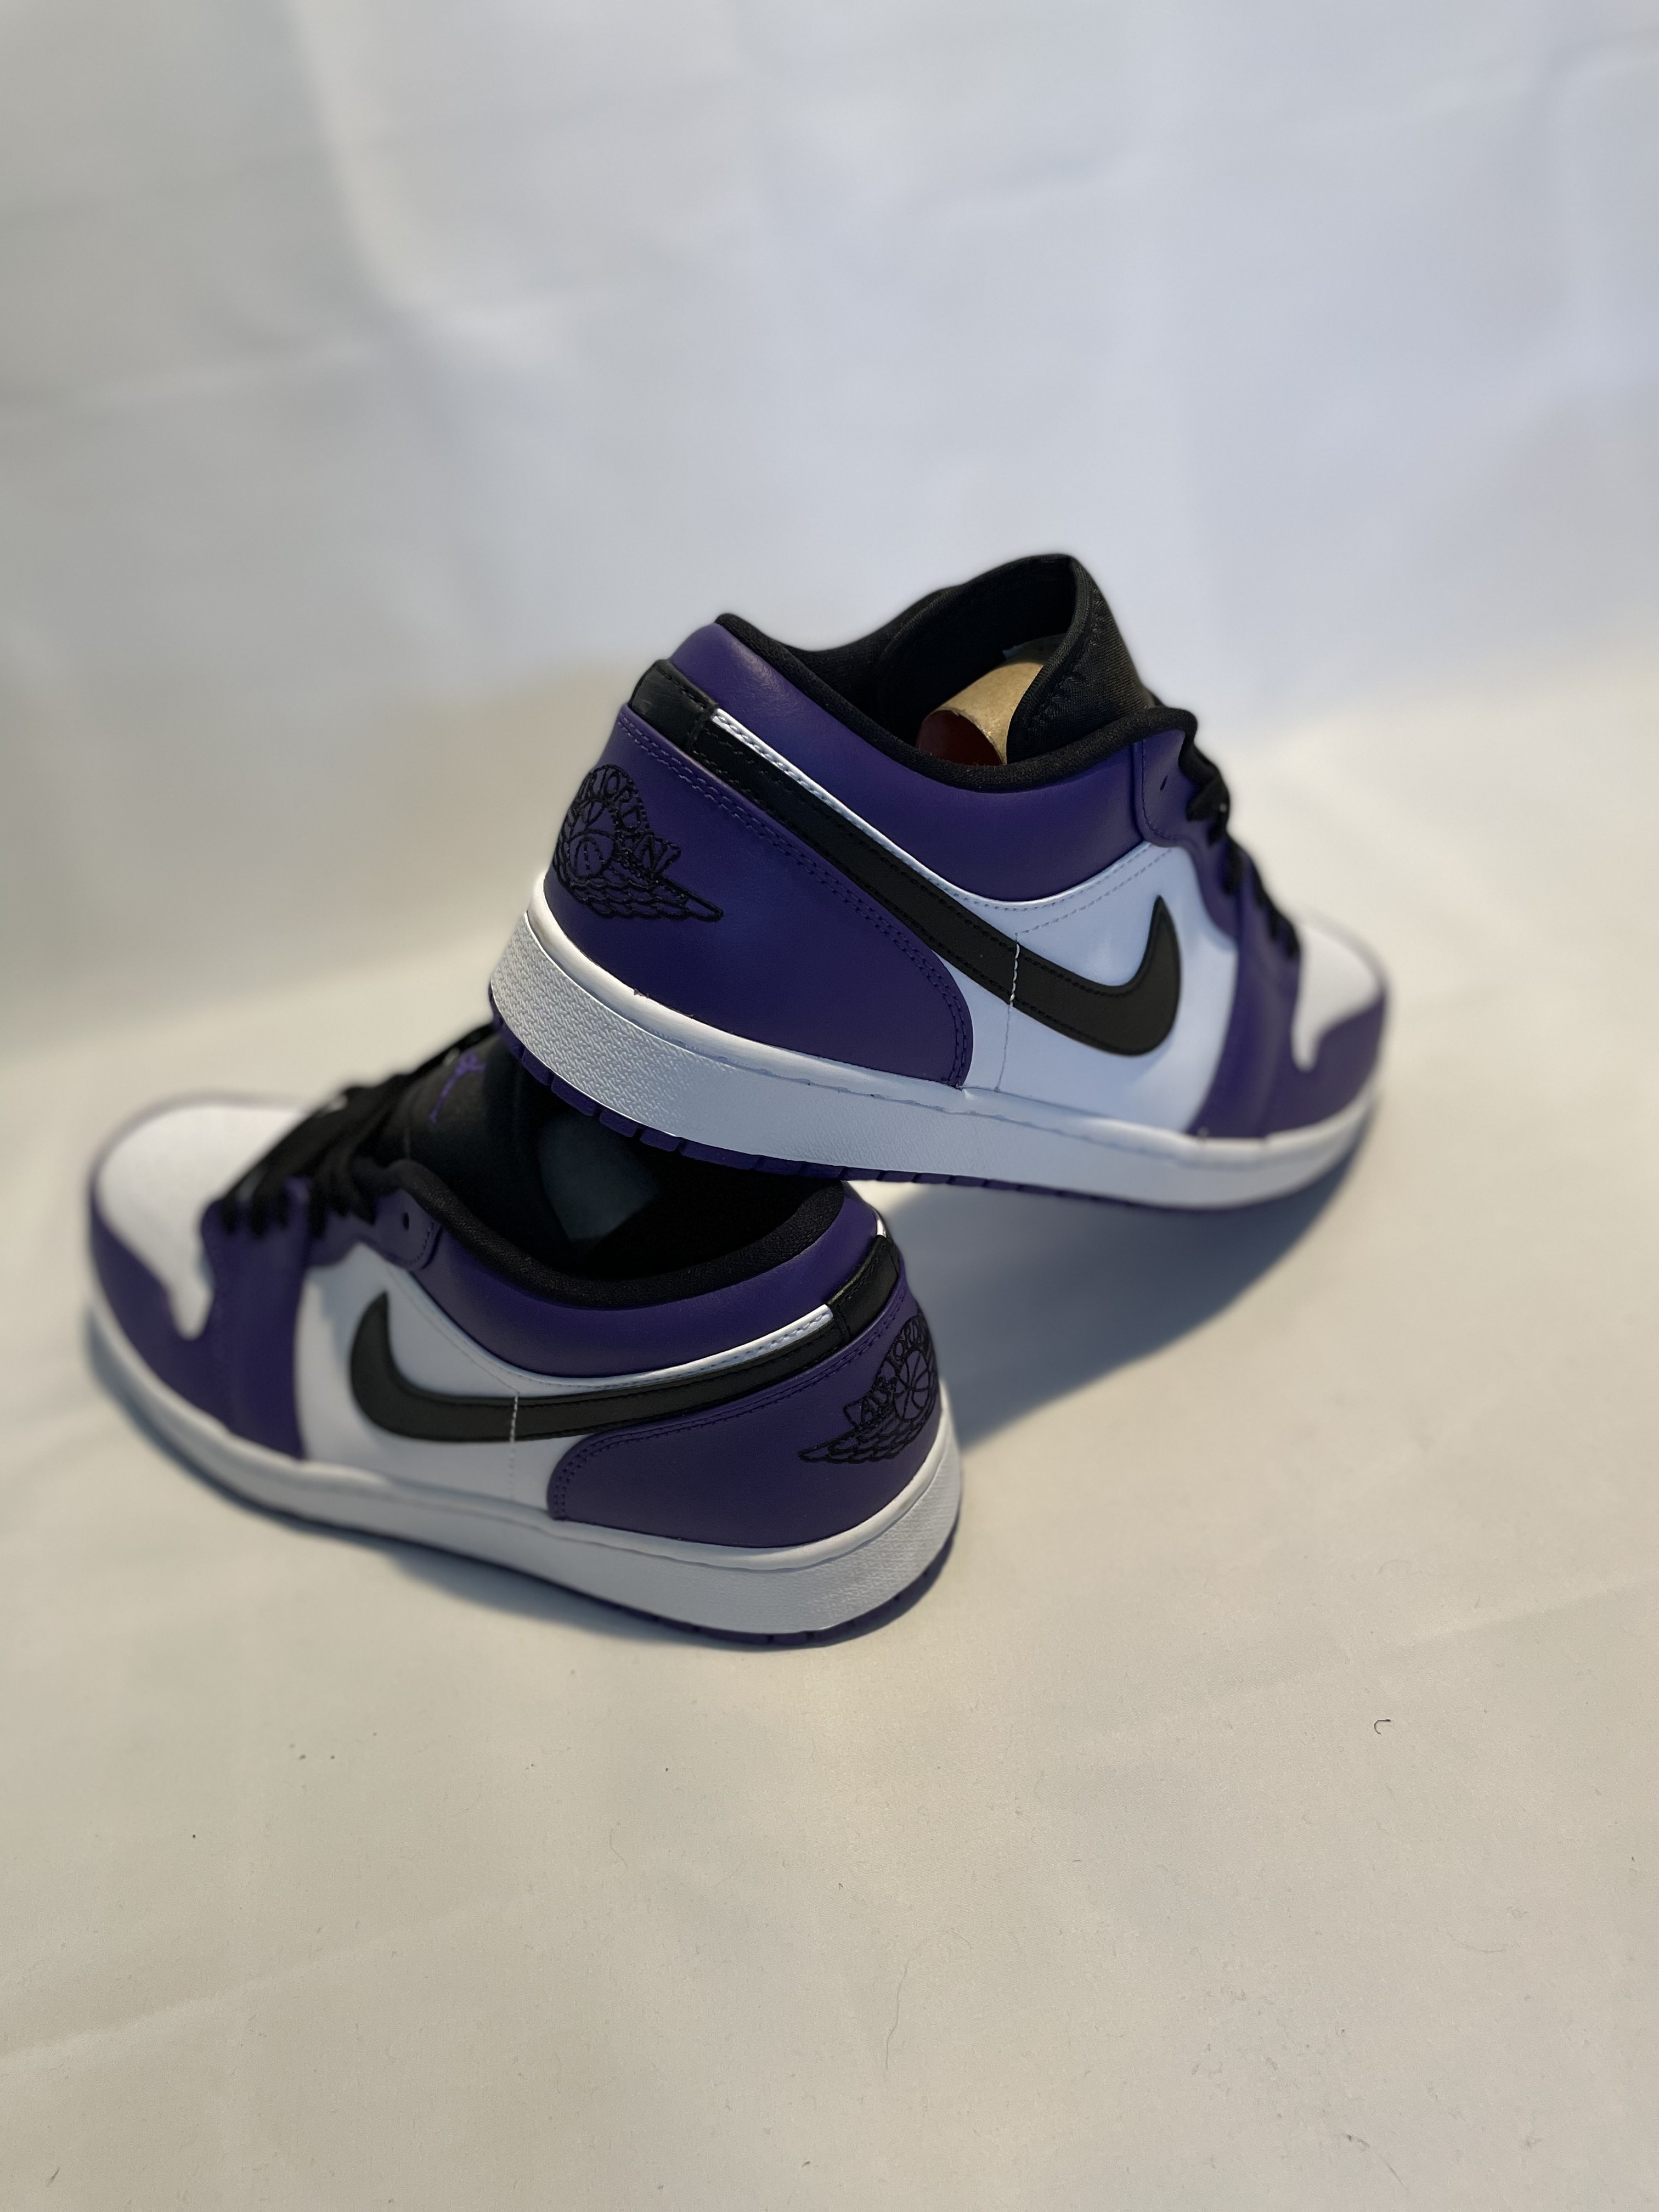 Jordan 1 low ‘court purple’ - 3